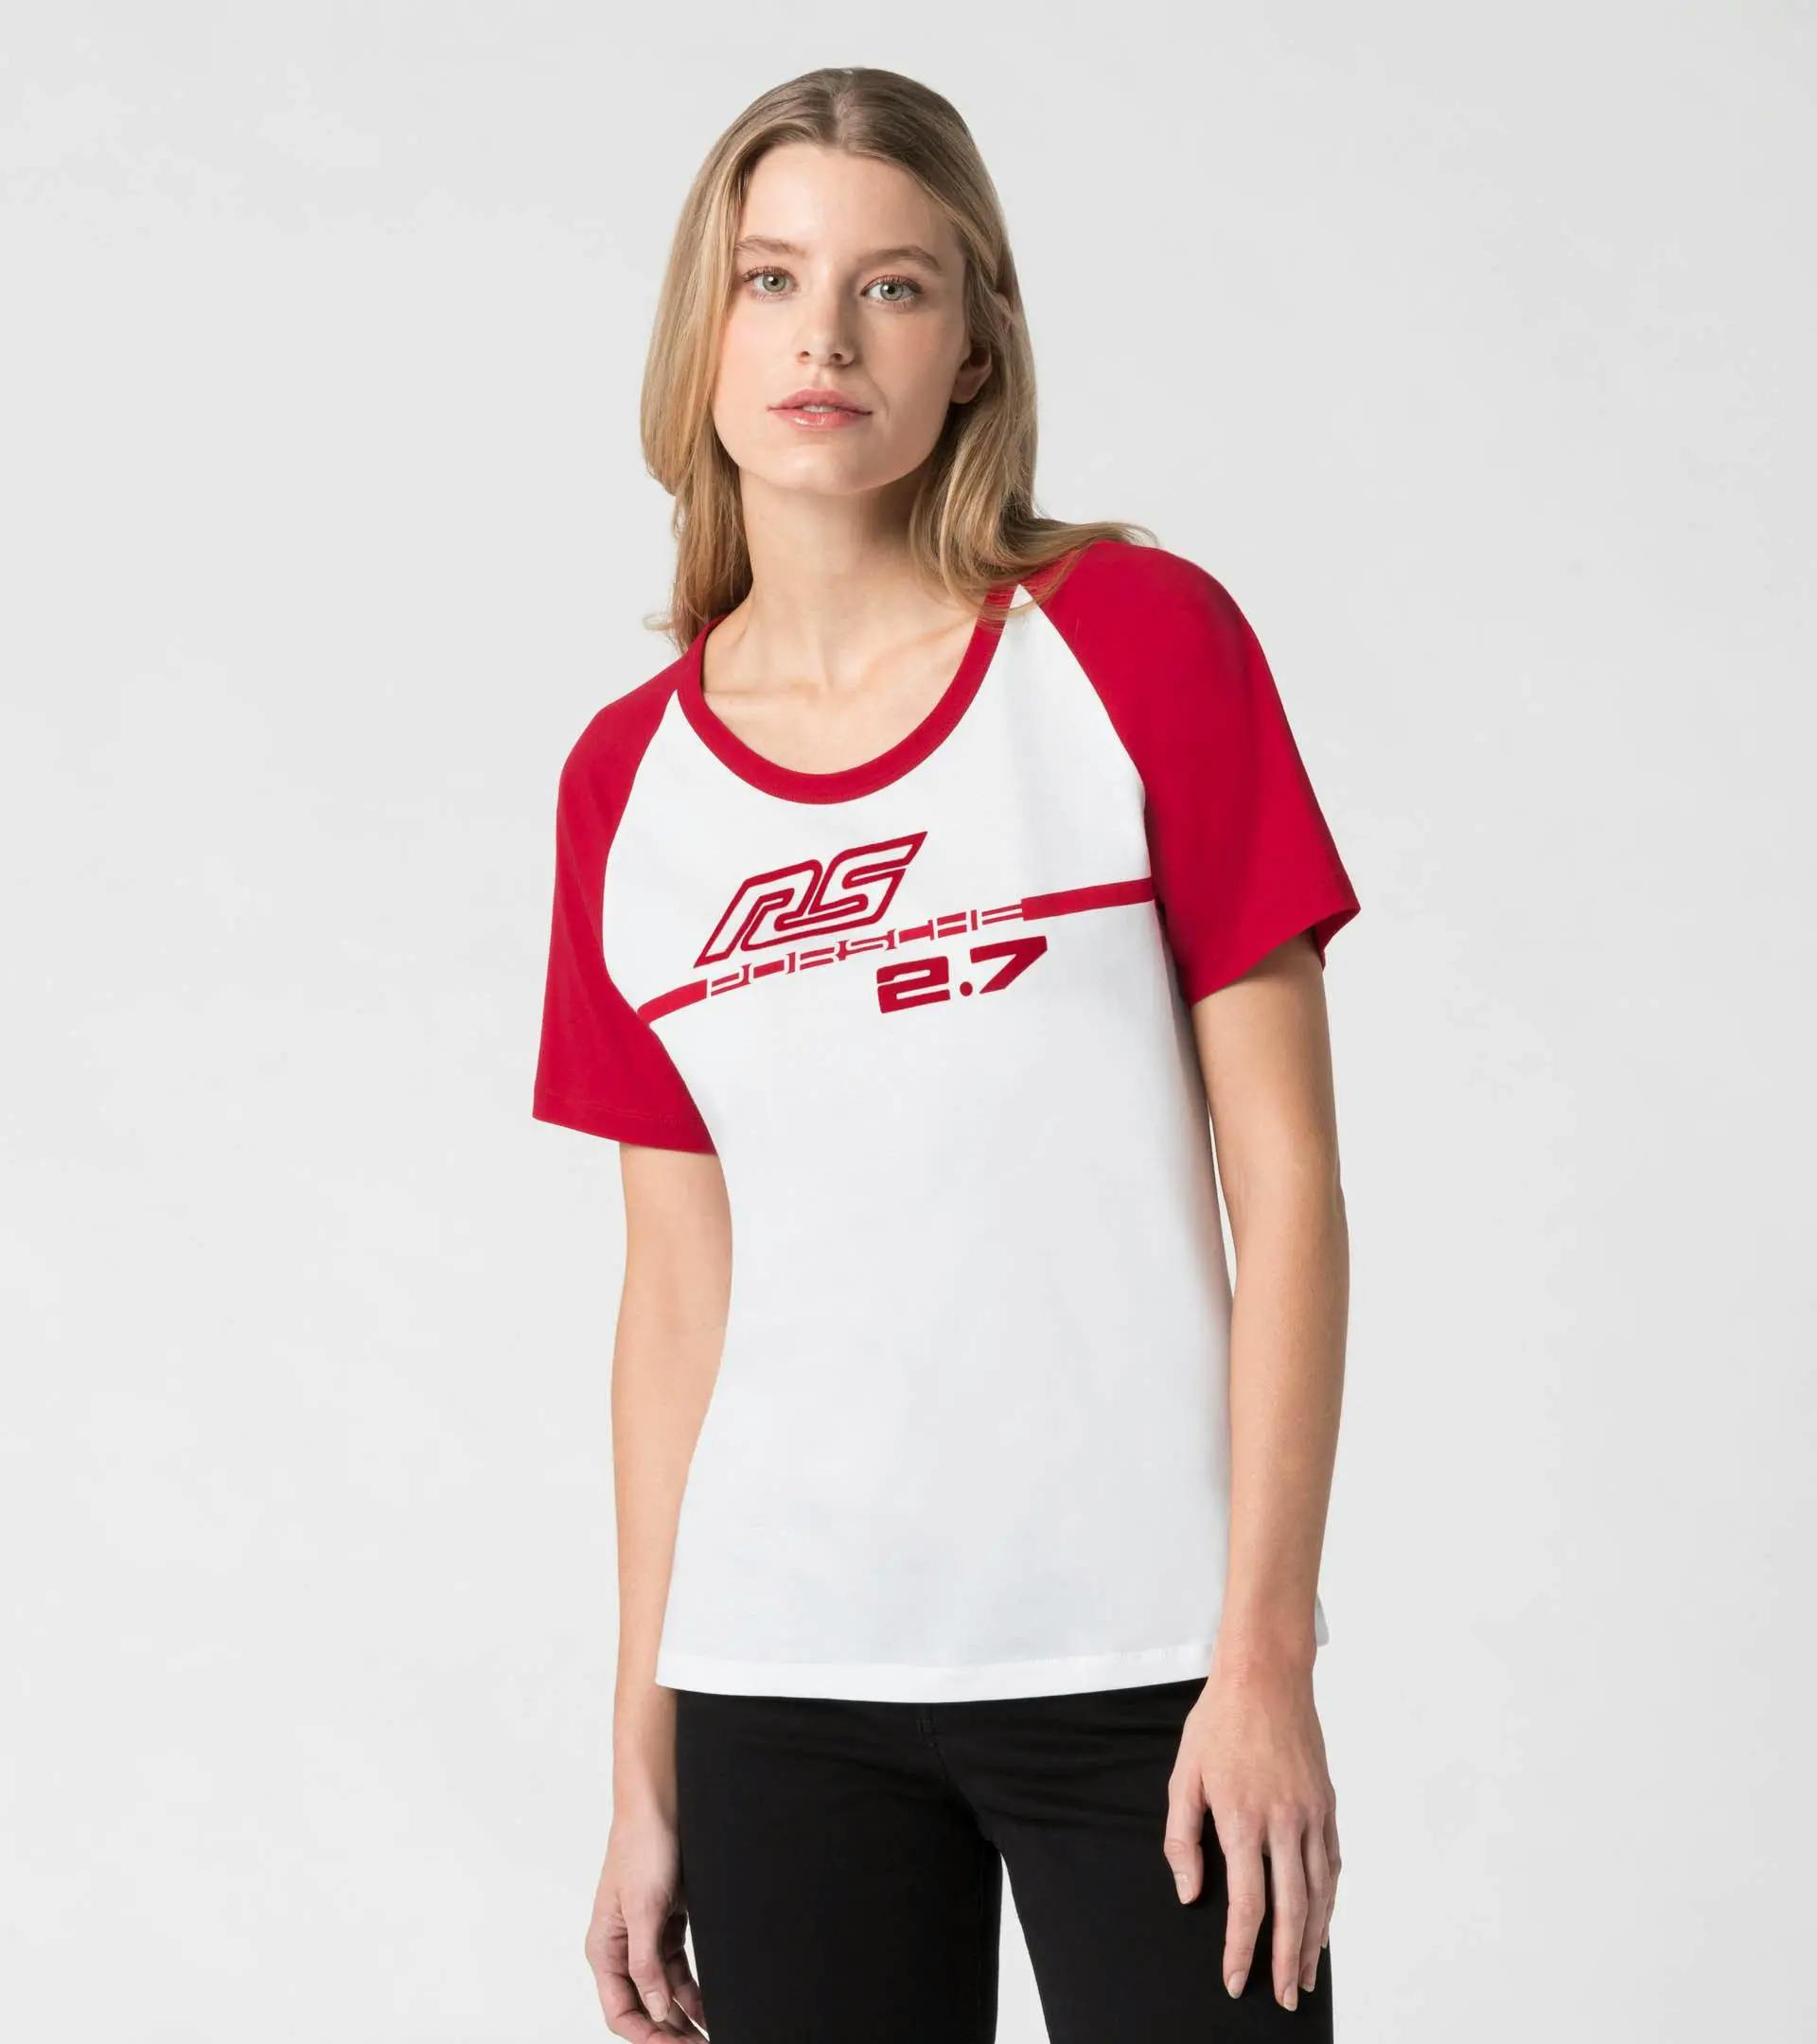 Camiseta para mujer – RS 2.7 5